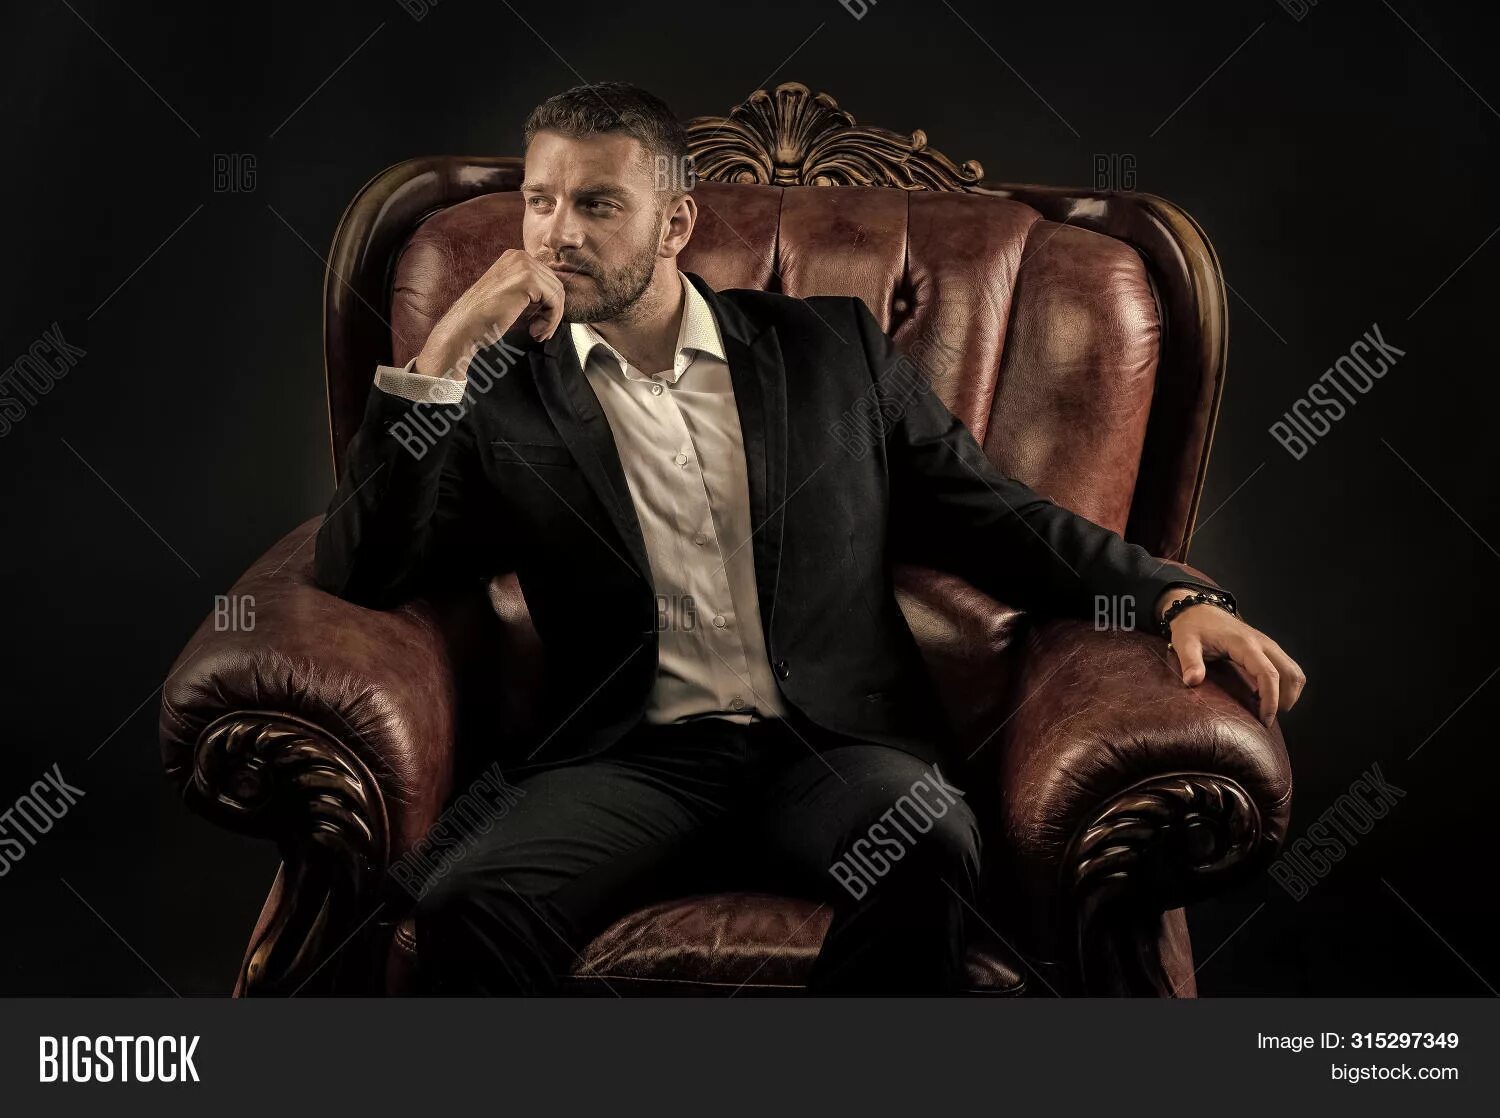 Мужчина в кресле. Парень сидит в кресле. Мужчина в кожаном кресле. Мужчина в костюме на диване.